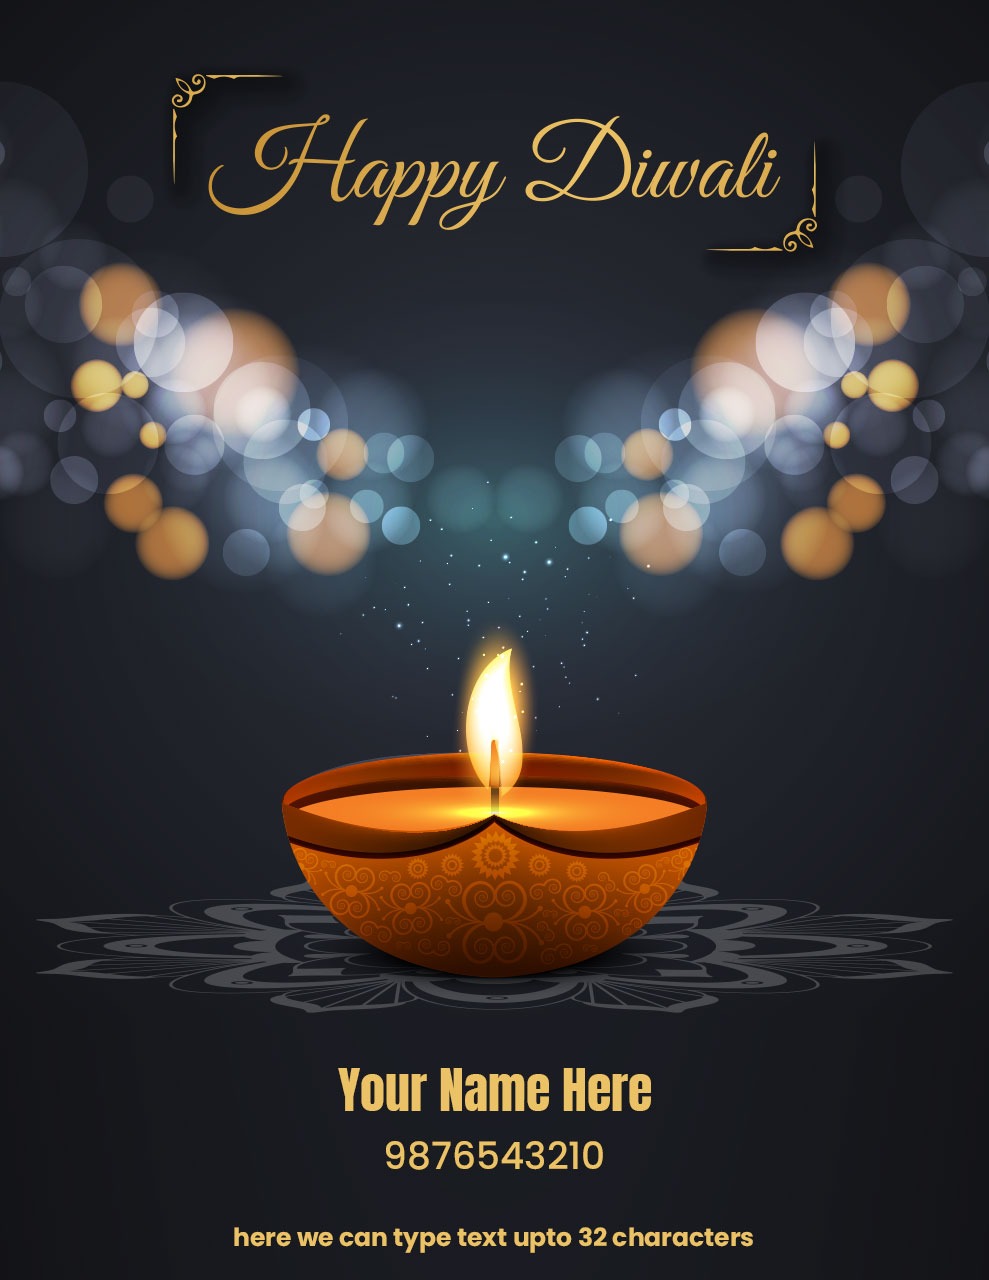 Wishing you Happy Diwali & a prosperous New Year